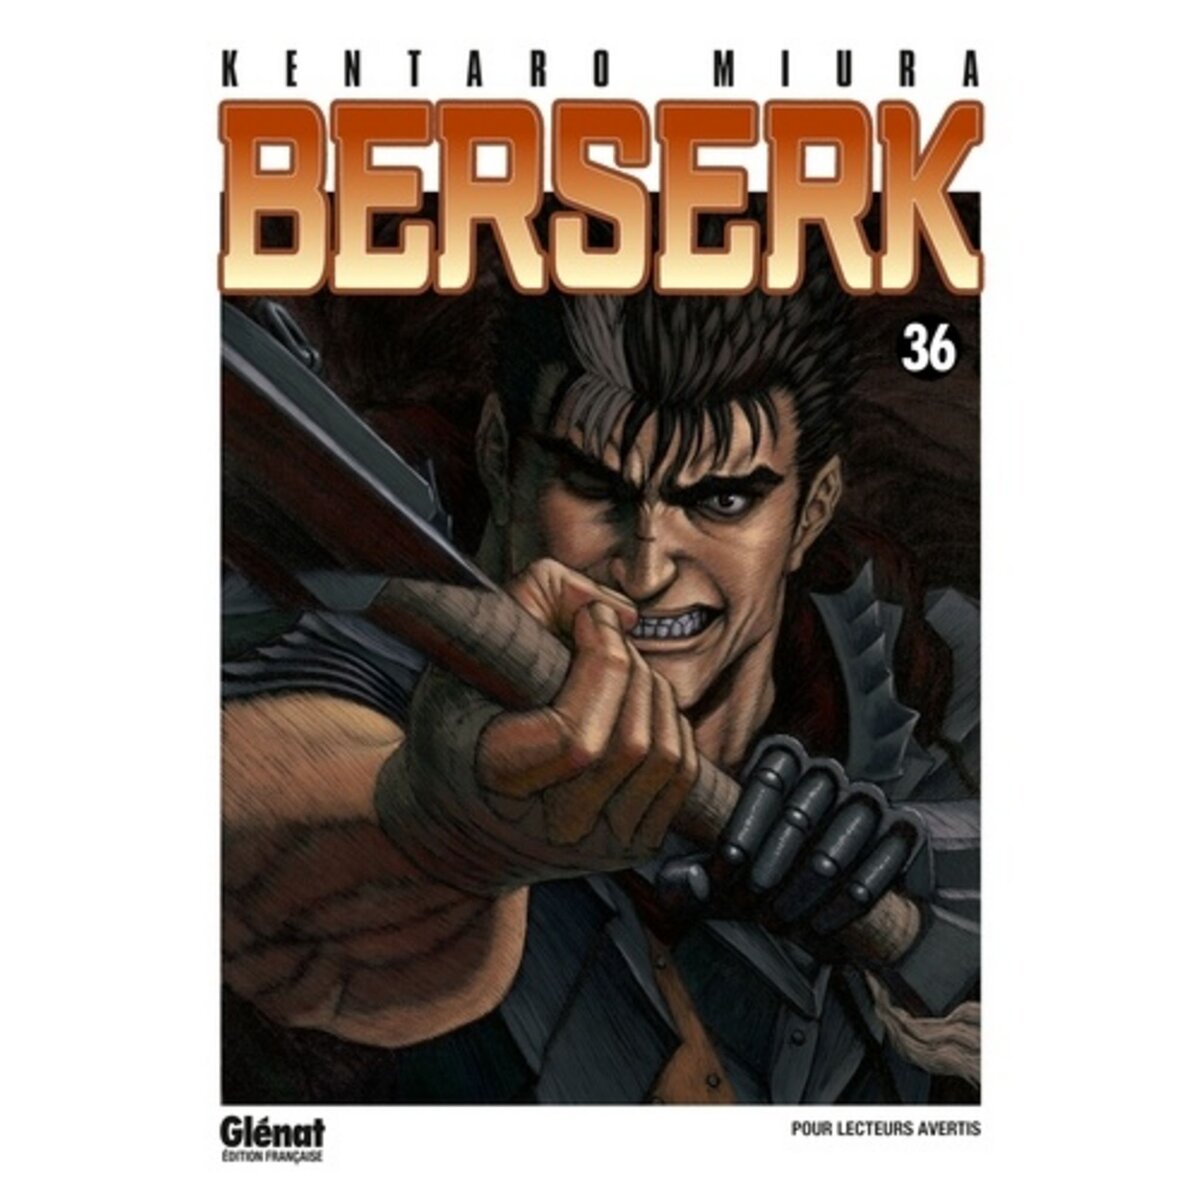  BERSERK TOME 36, Miura Kentaro